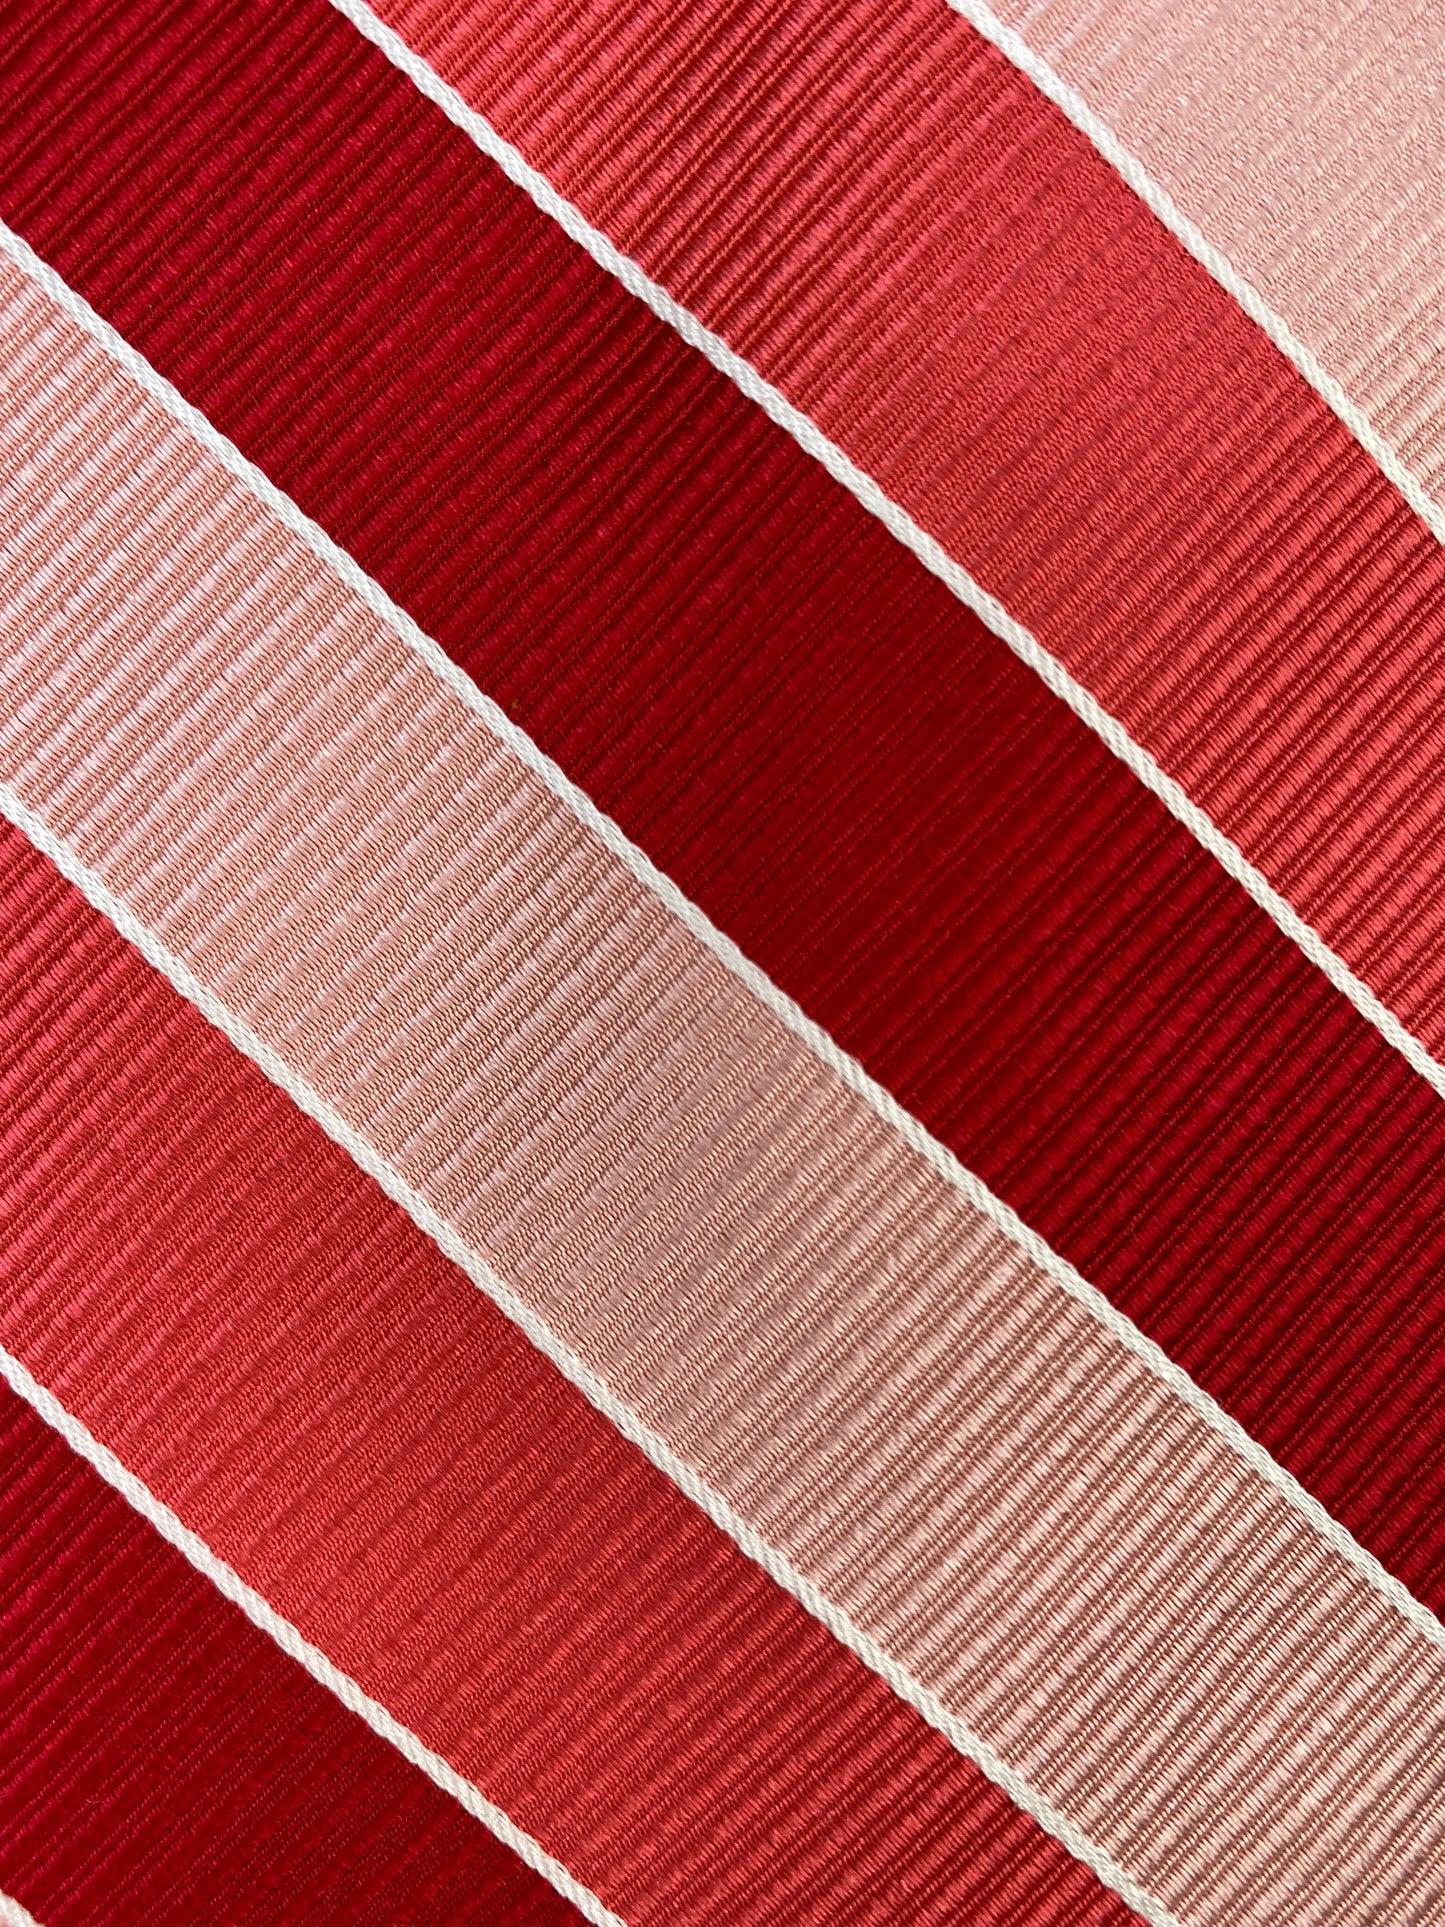 Close-up of: 90s Deadstock Silk Necktie, Men's Vintage Red/Pink Diagonal Repp Stripe Pattern Tie, NOS